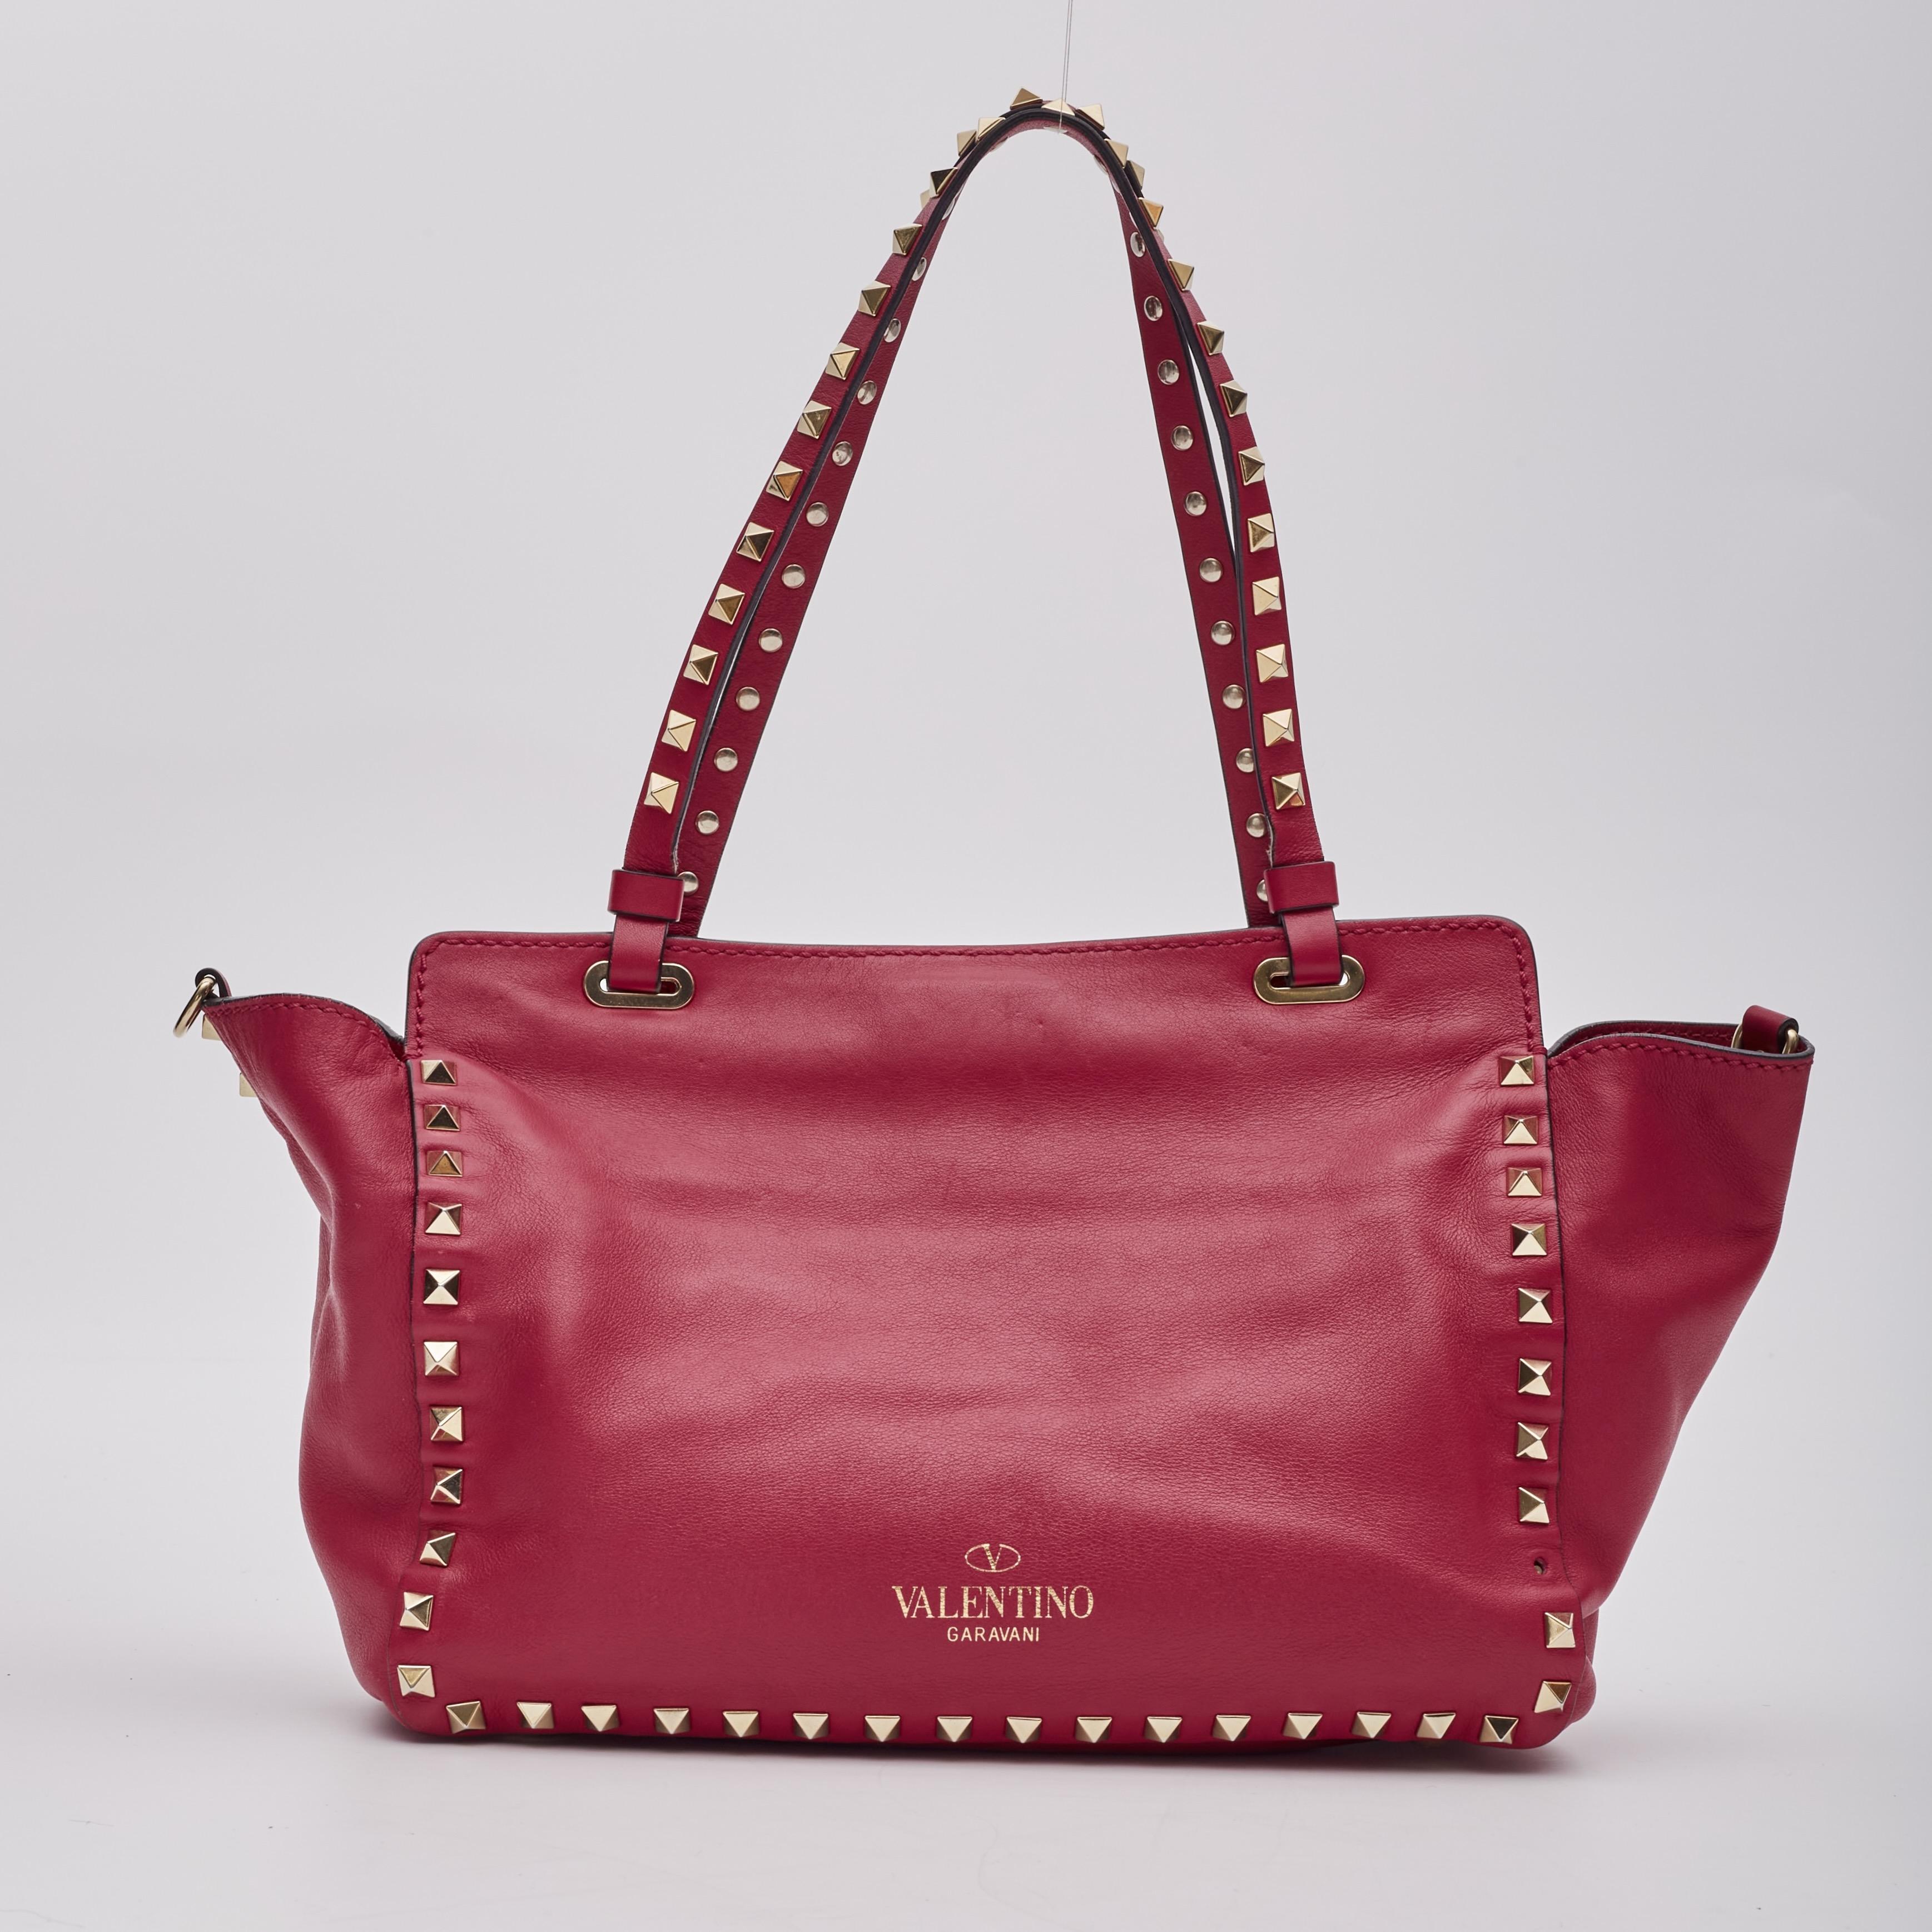 Valentino Garavani Red Leather Rockstud Shoulder Bag In Good Condition For Sale In Montreal, Quebec